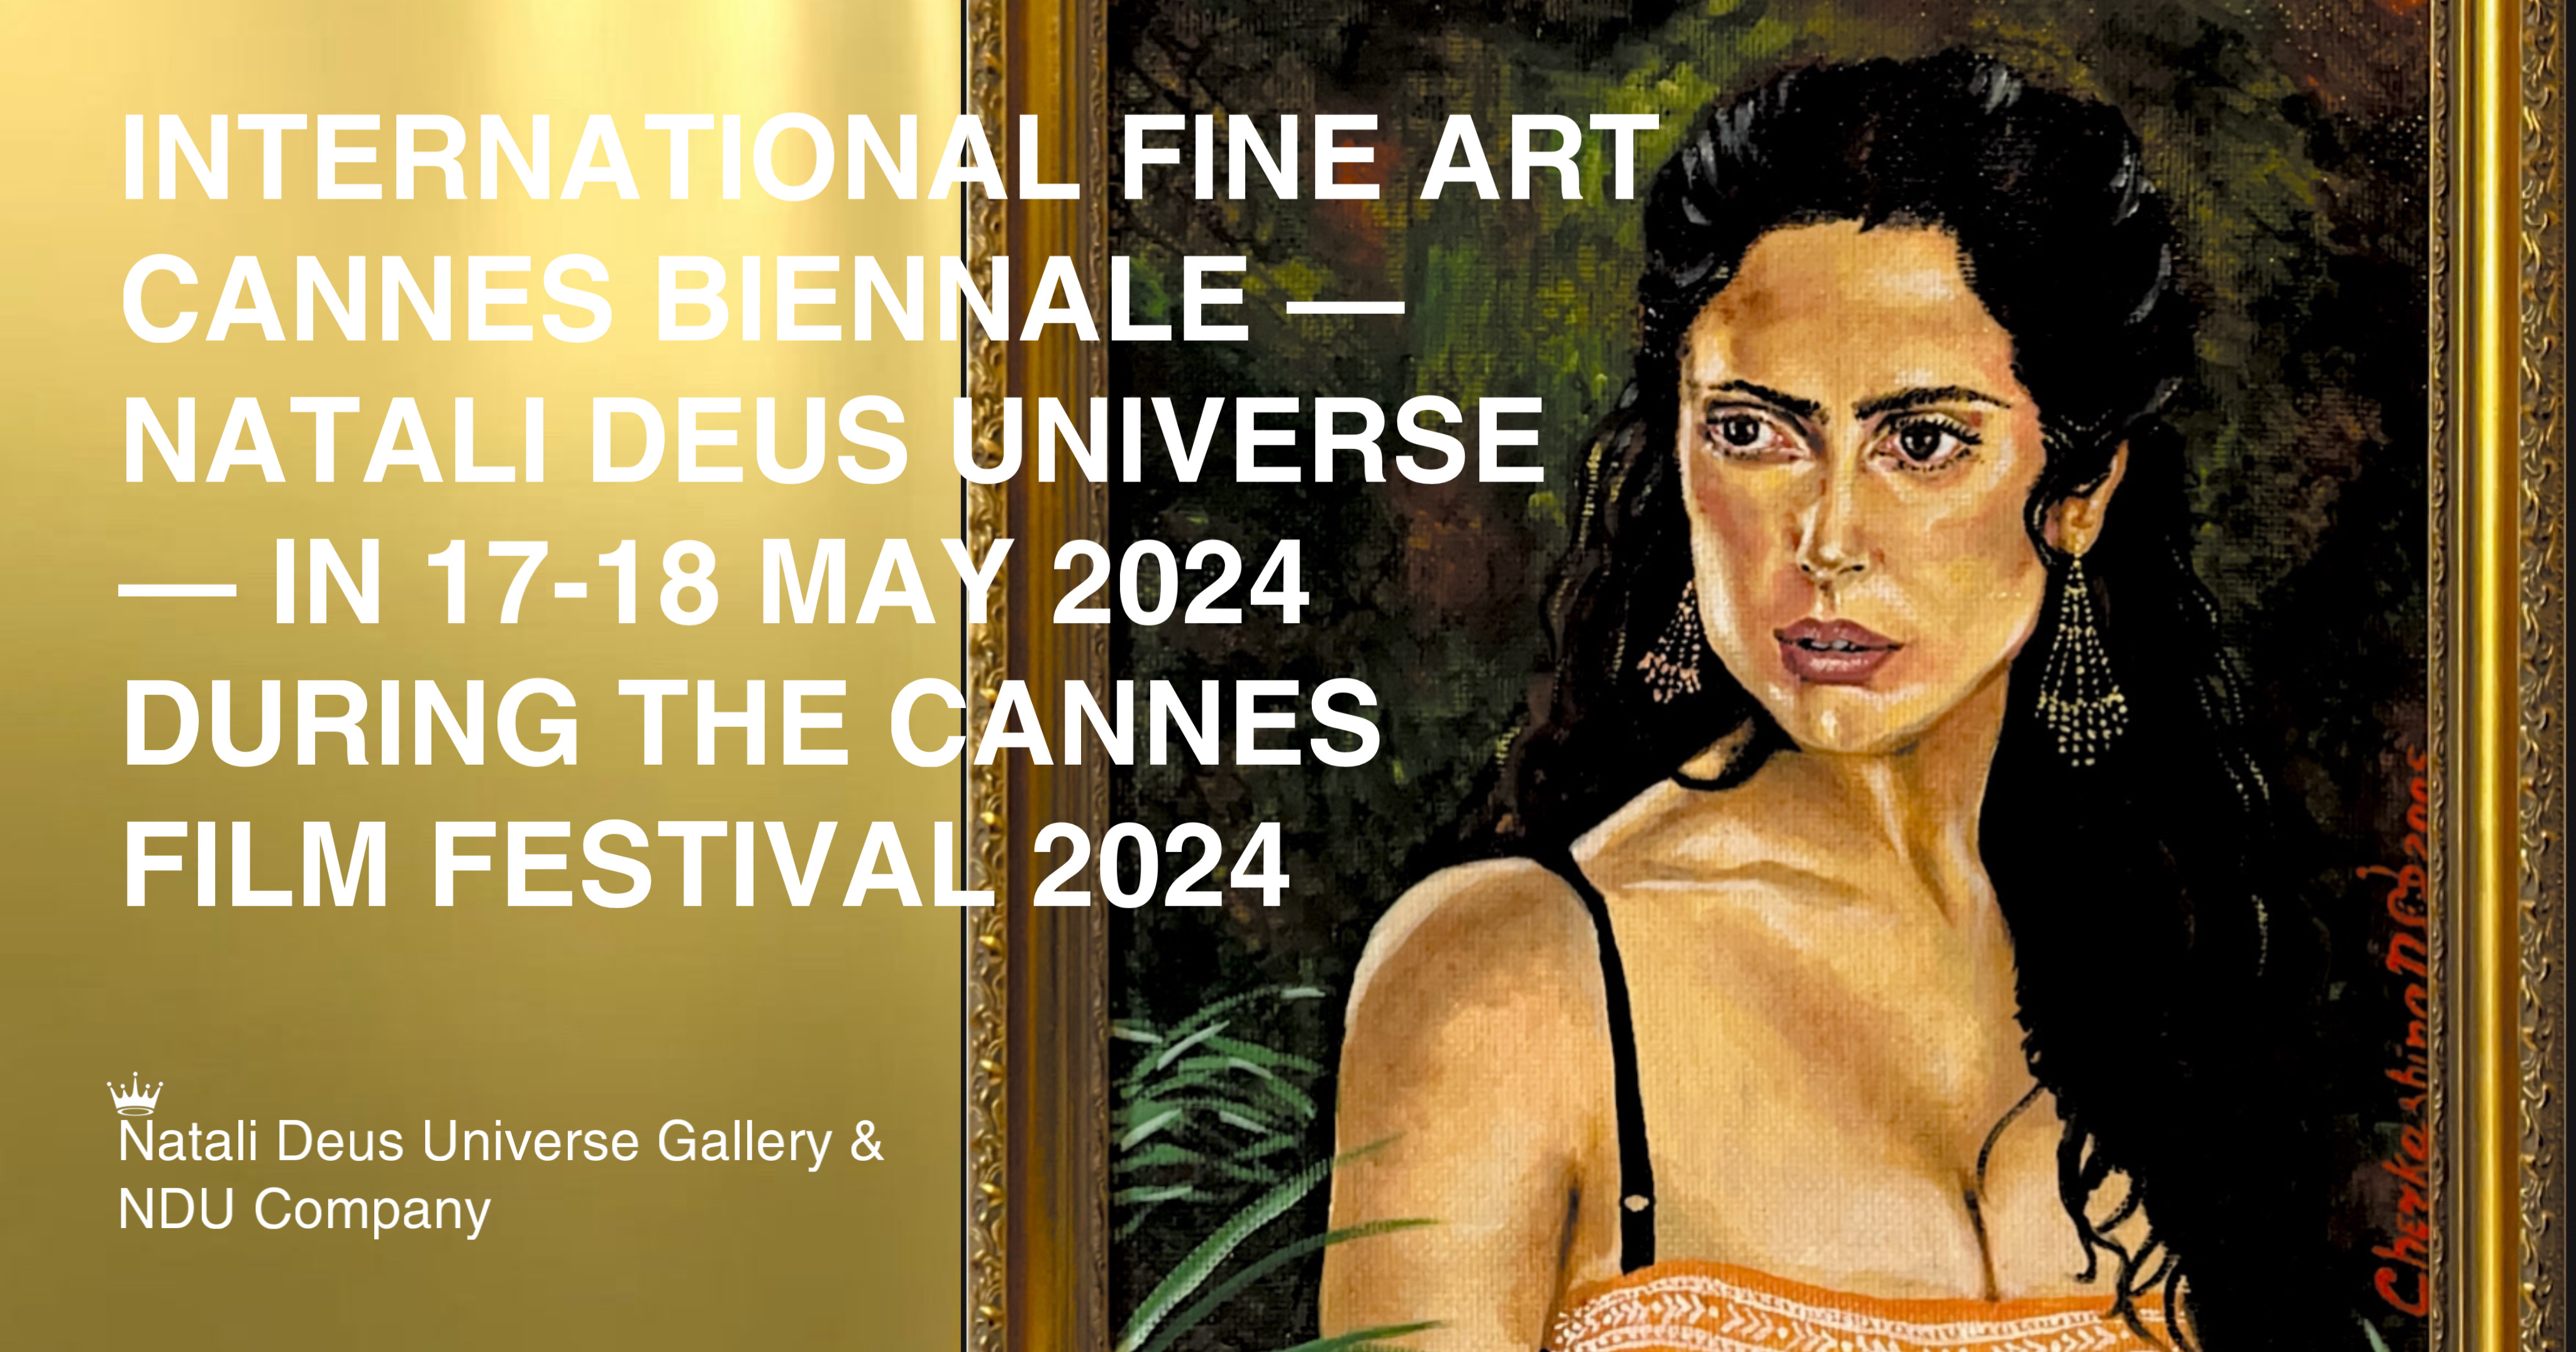 Natali Deus Universe Gallery - International Fine Art Cannes Biennale - Natali Deus Universe - in 17-18 may 2024 during the Cannes Film Festival 2024